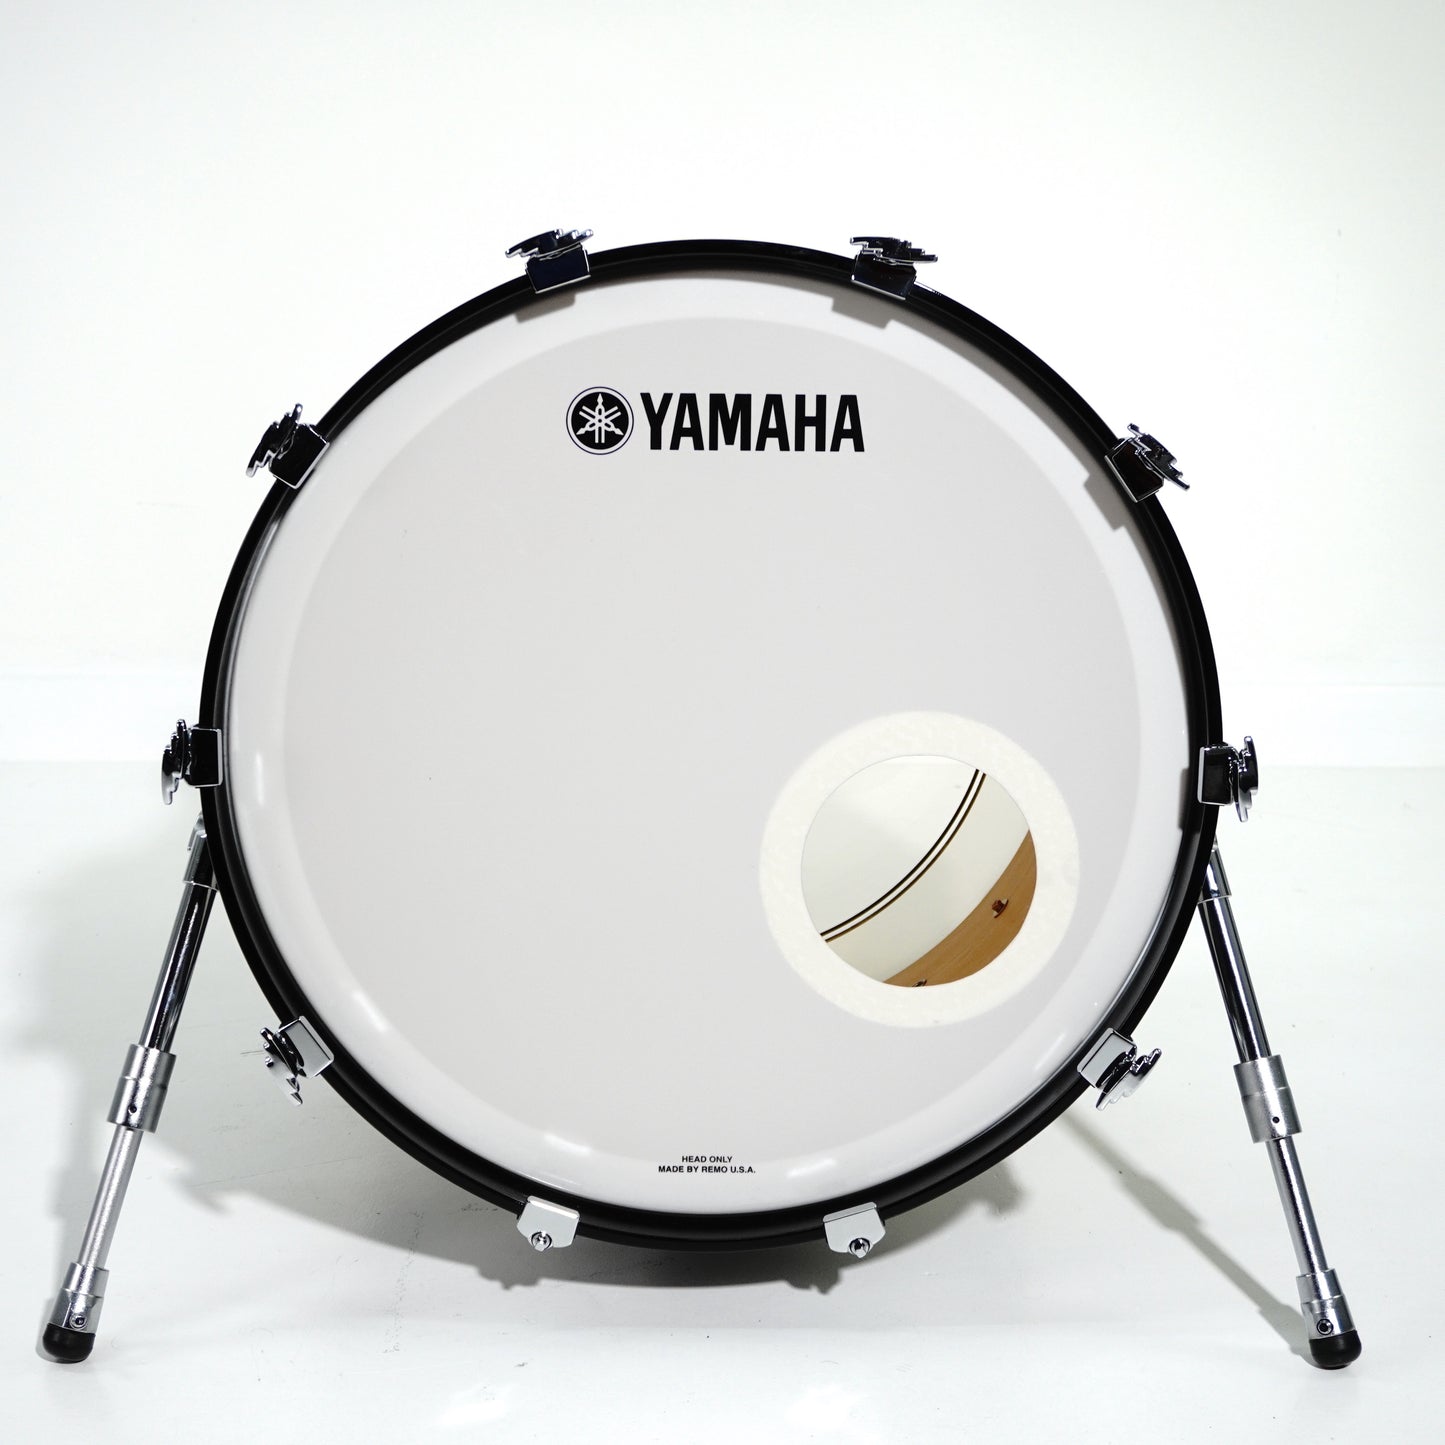 Yamaha PHXB-2216AR-1978 Phoenix 22x16 inch Bass Drum